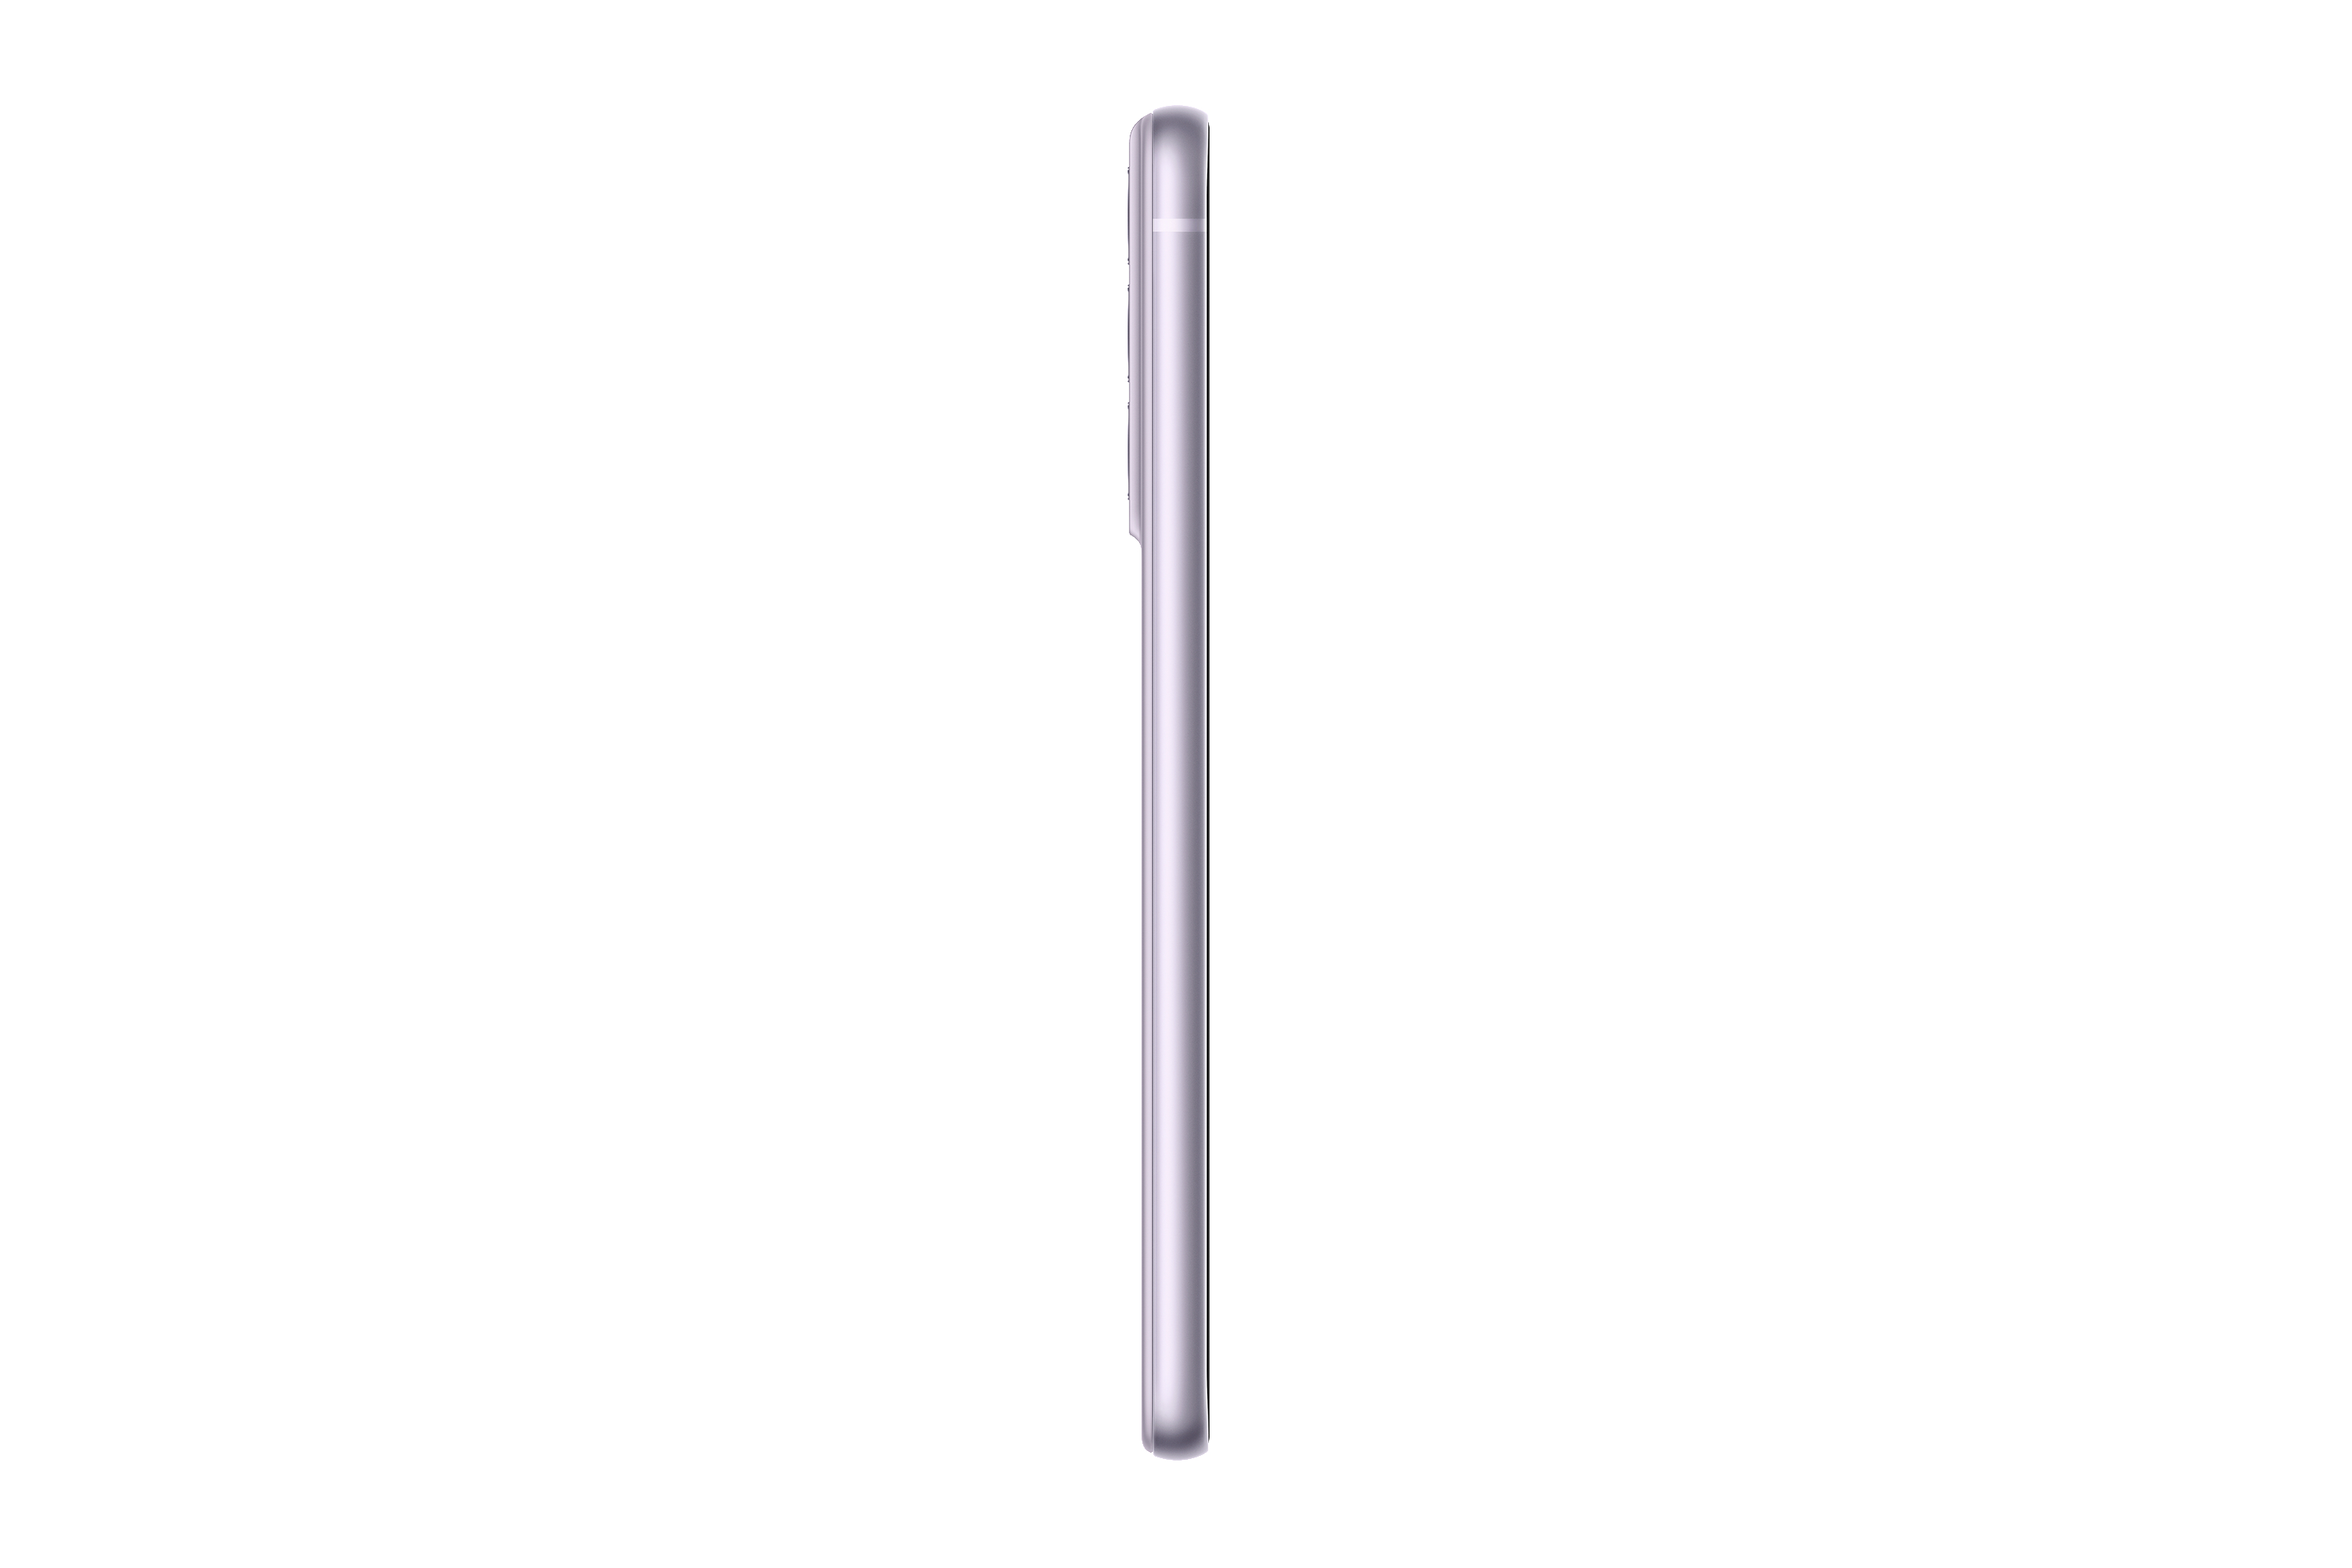 Lavender GB 5G SIM S21 FE 256 Dual Galaxy SAMSUNG